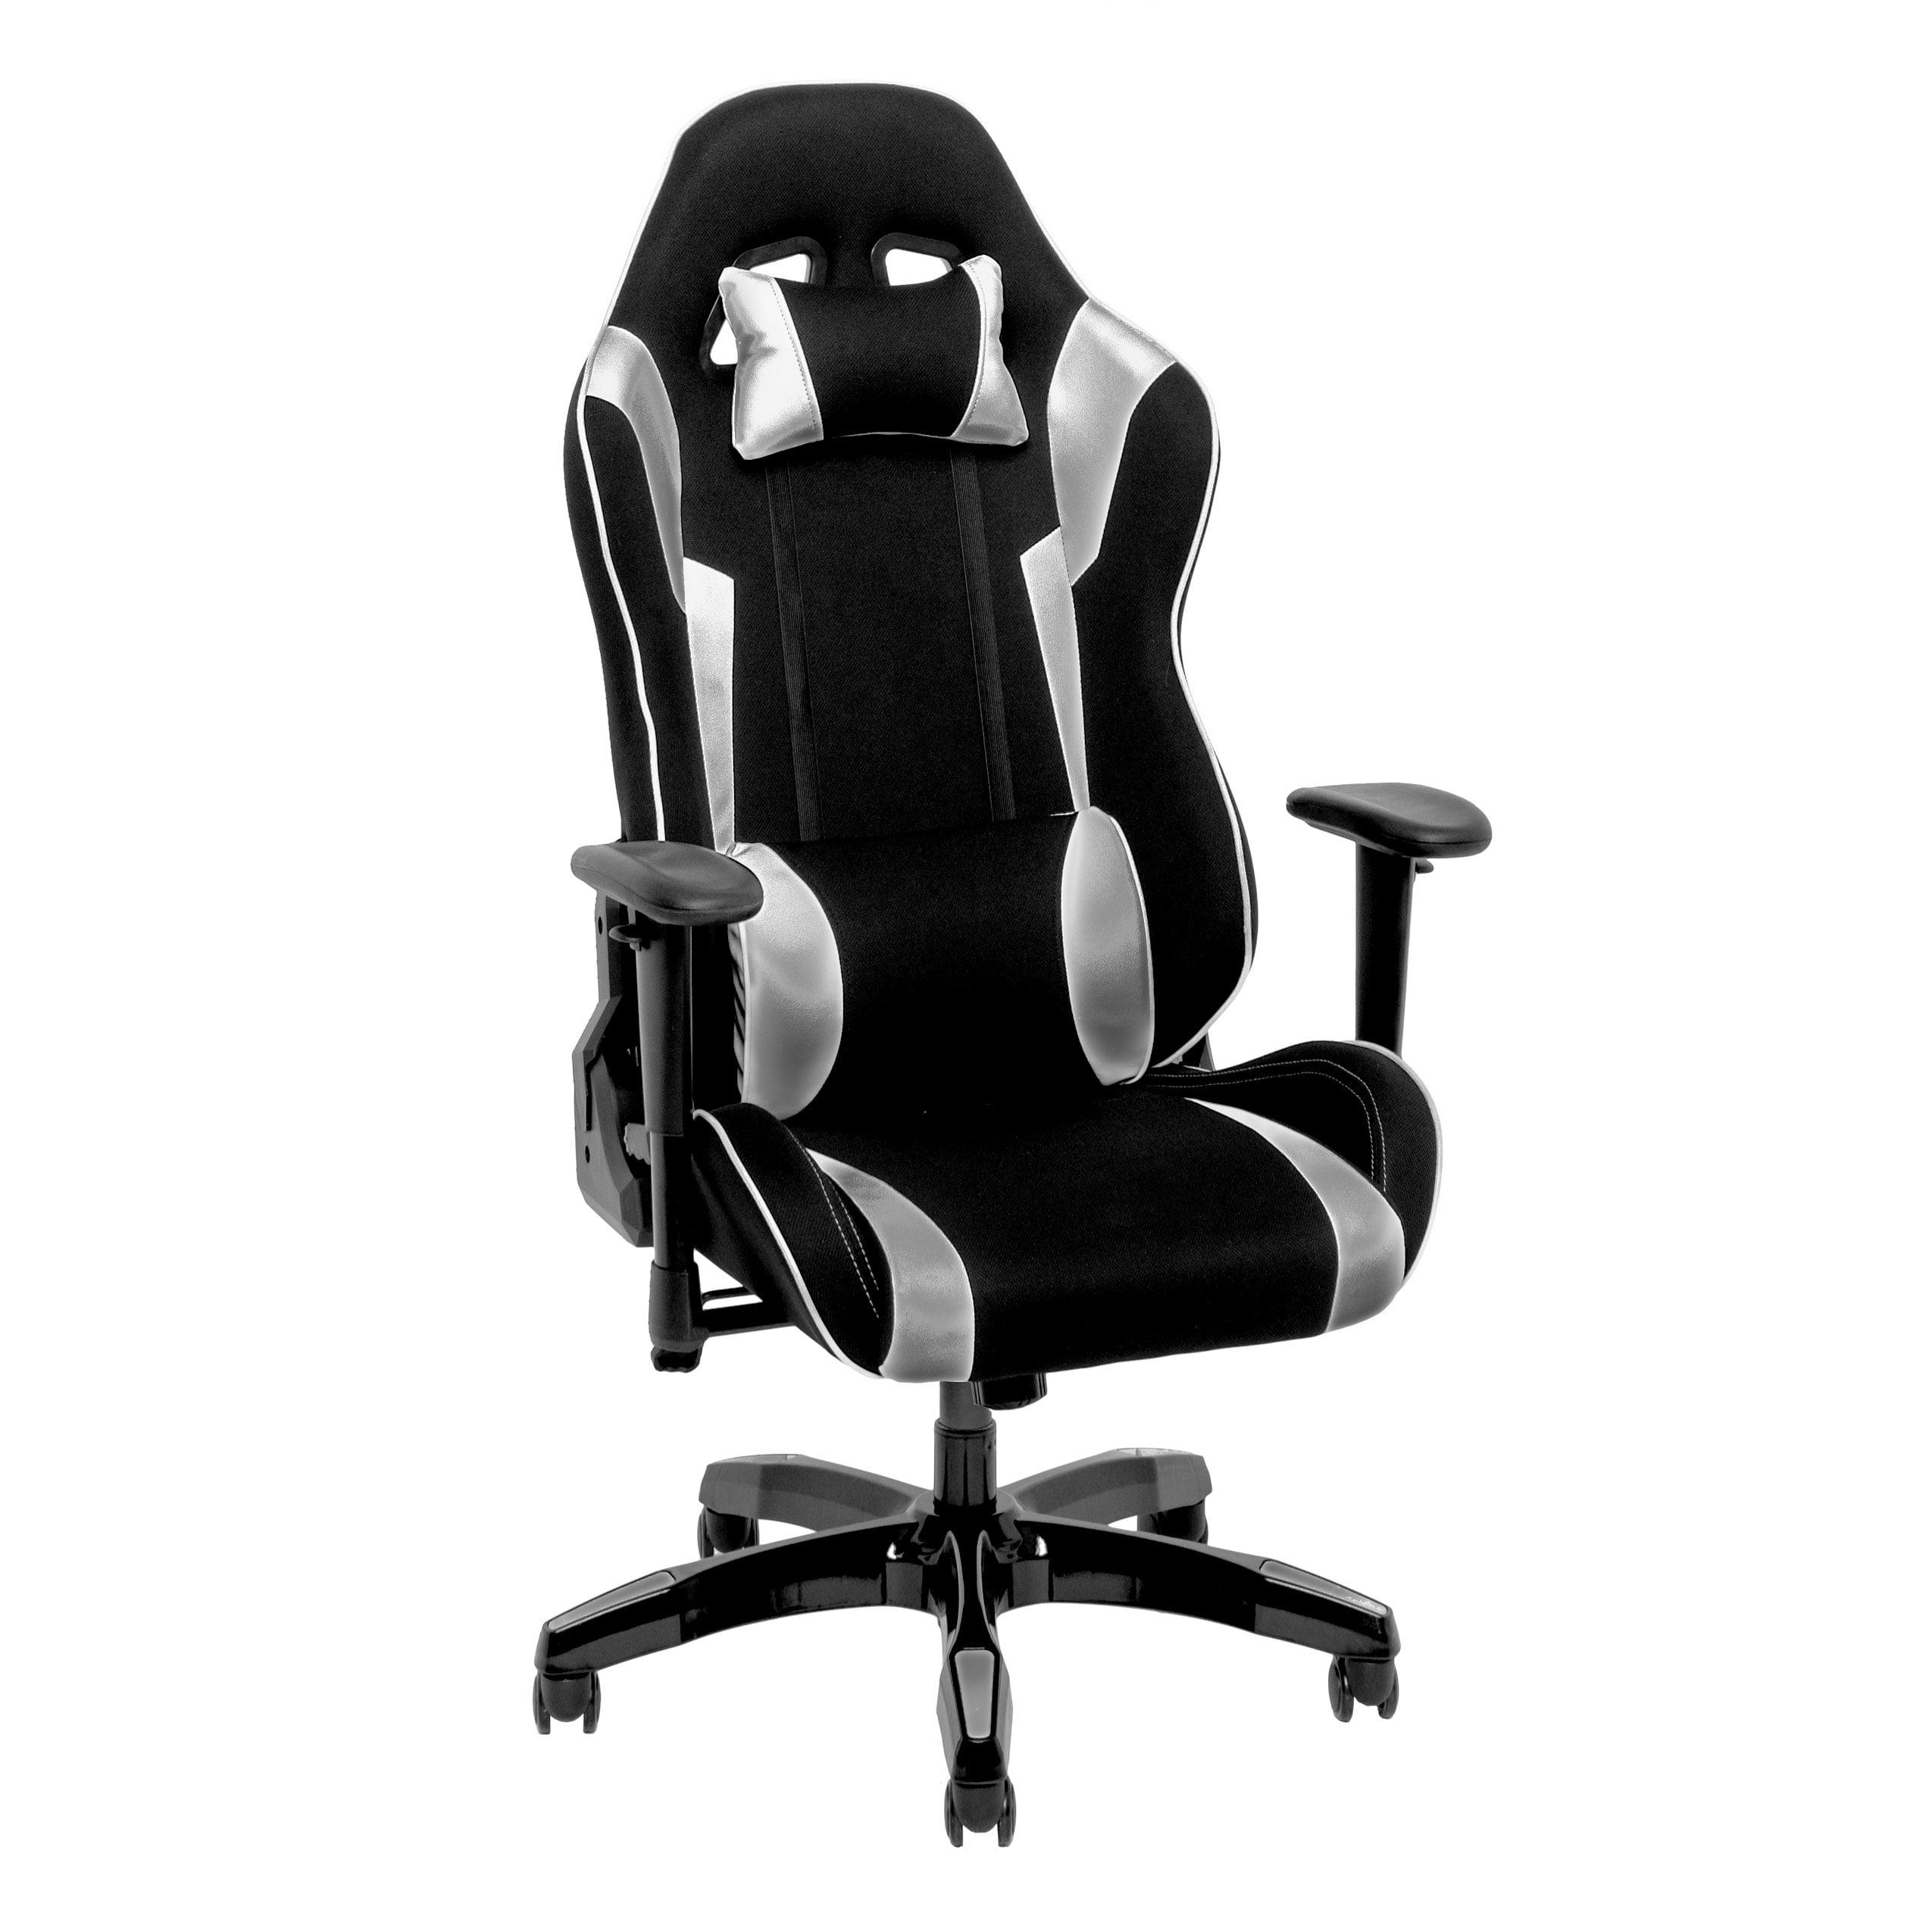 High-Back Ergonomic Gaming Chair with Adjustable Armrests, Black/Silver